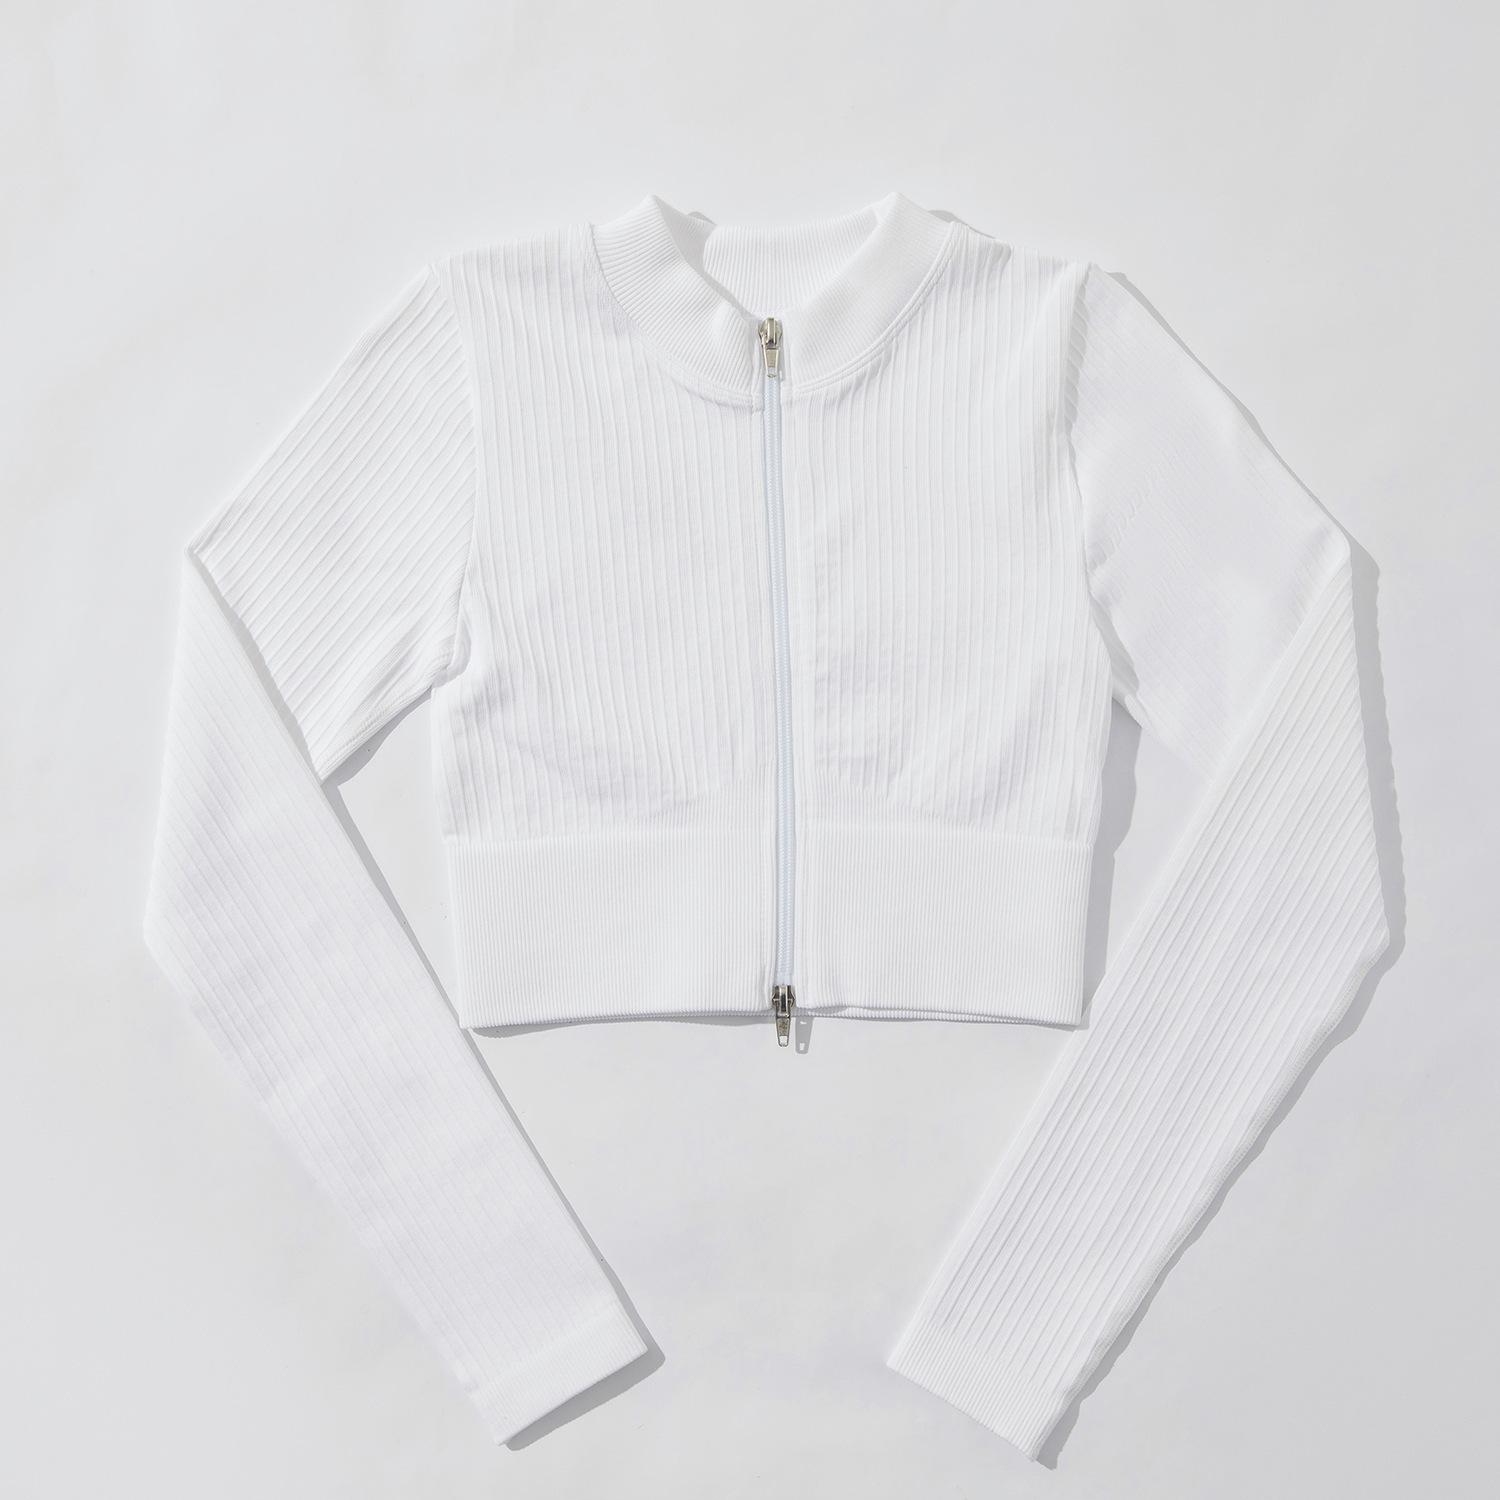 White zip-up long sleeves